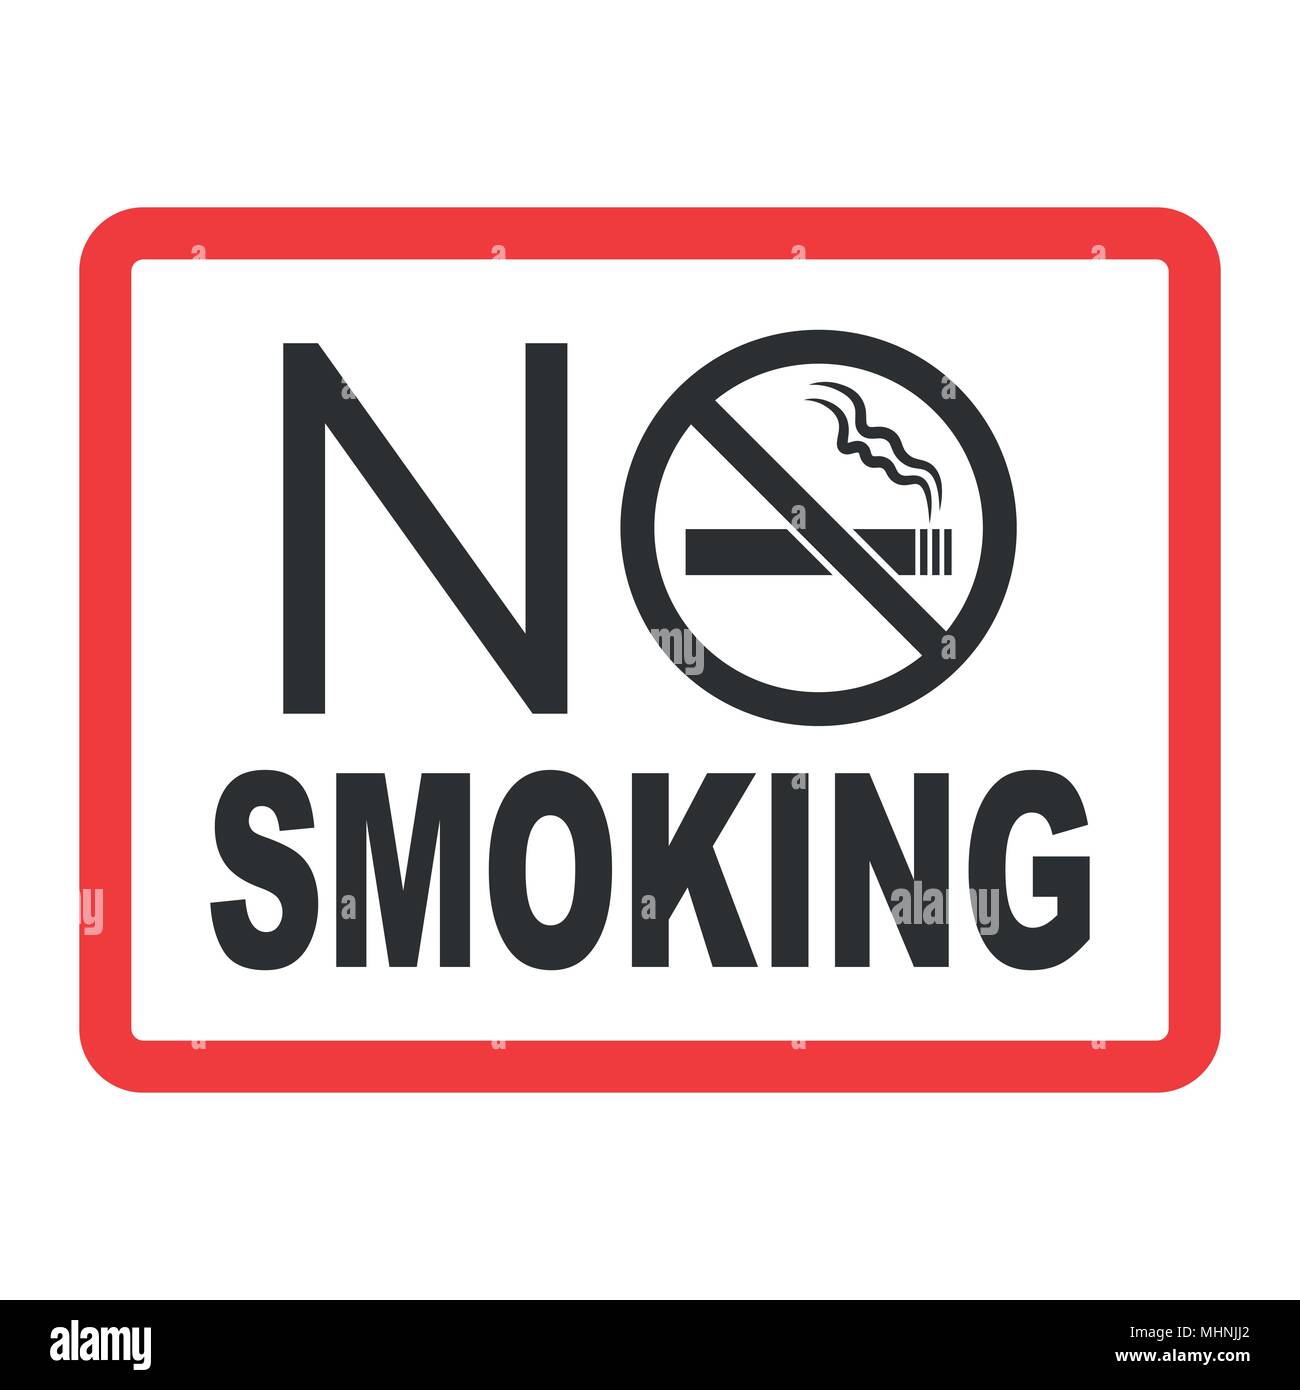 No smoking sign. No smoke icon. Stop smoking symbol. Vector illustration. Icon for public places. Stock Vector